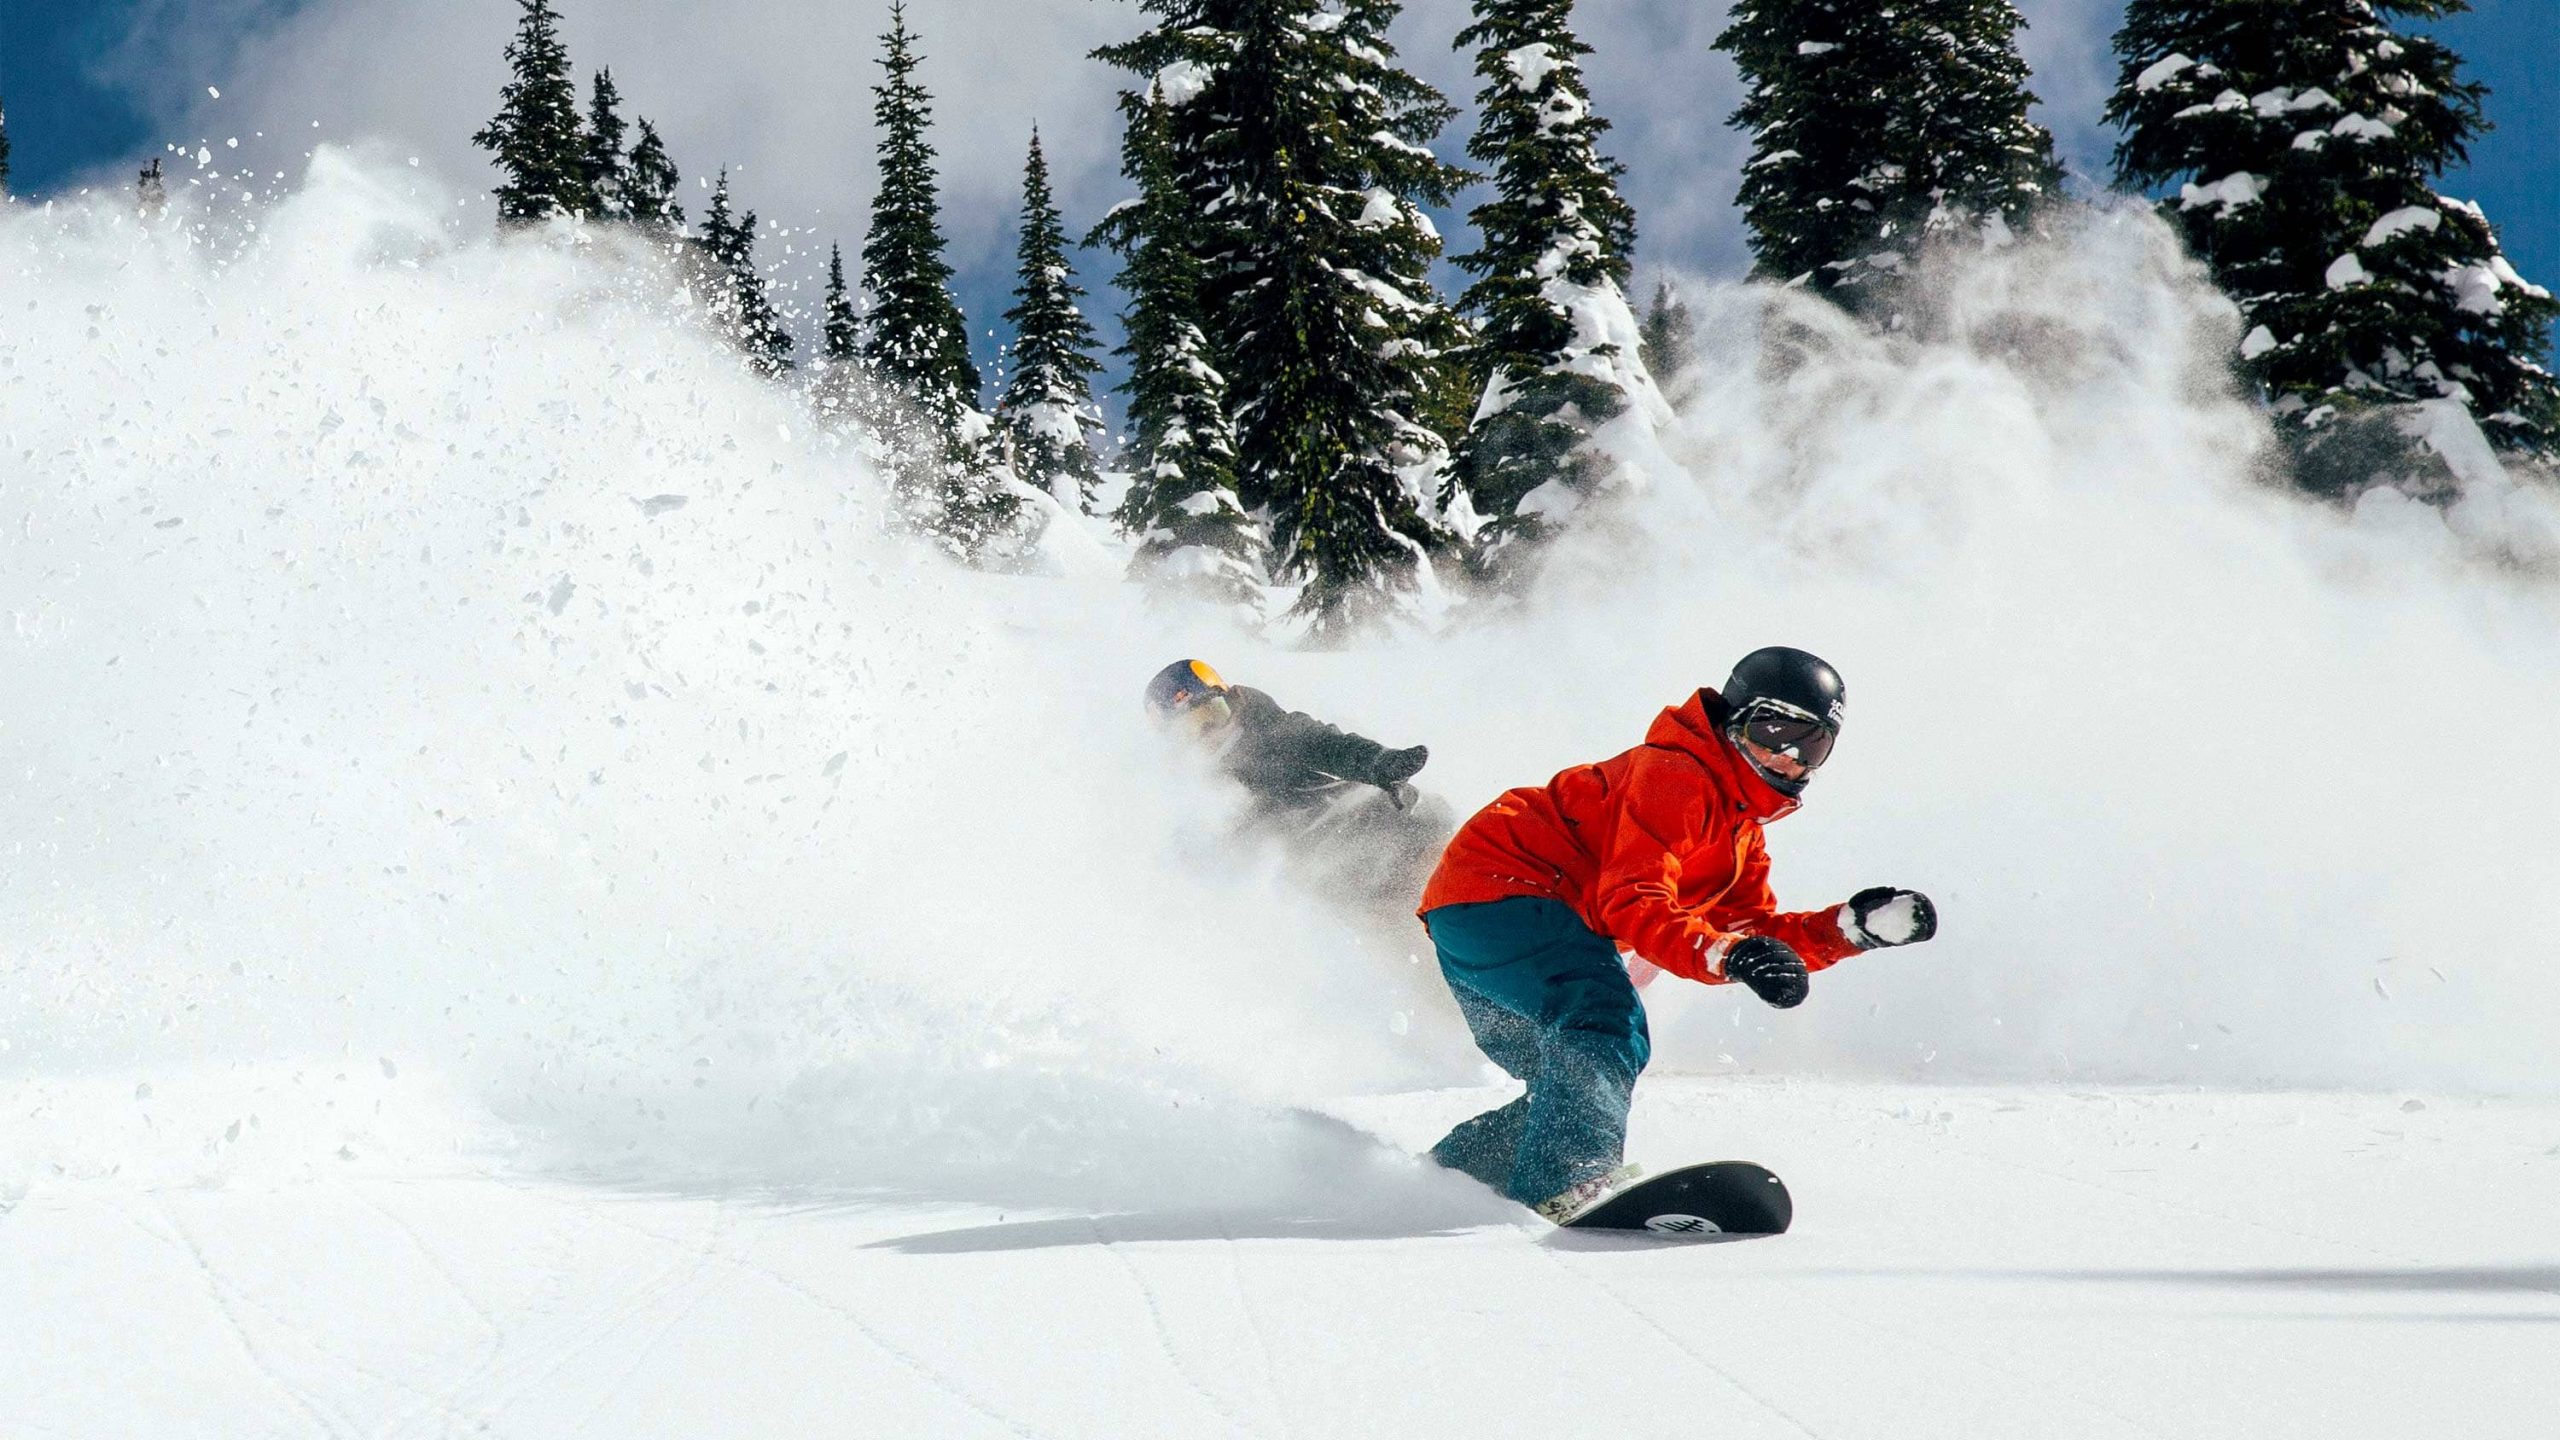 Snowboard Park City Best Ski Resorts in the US